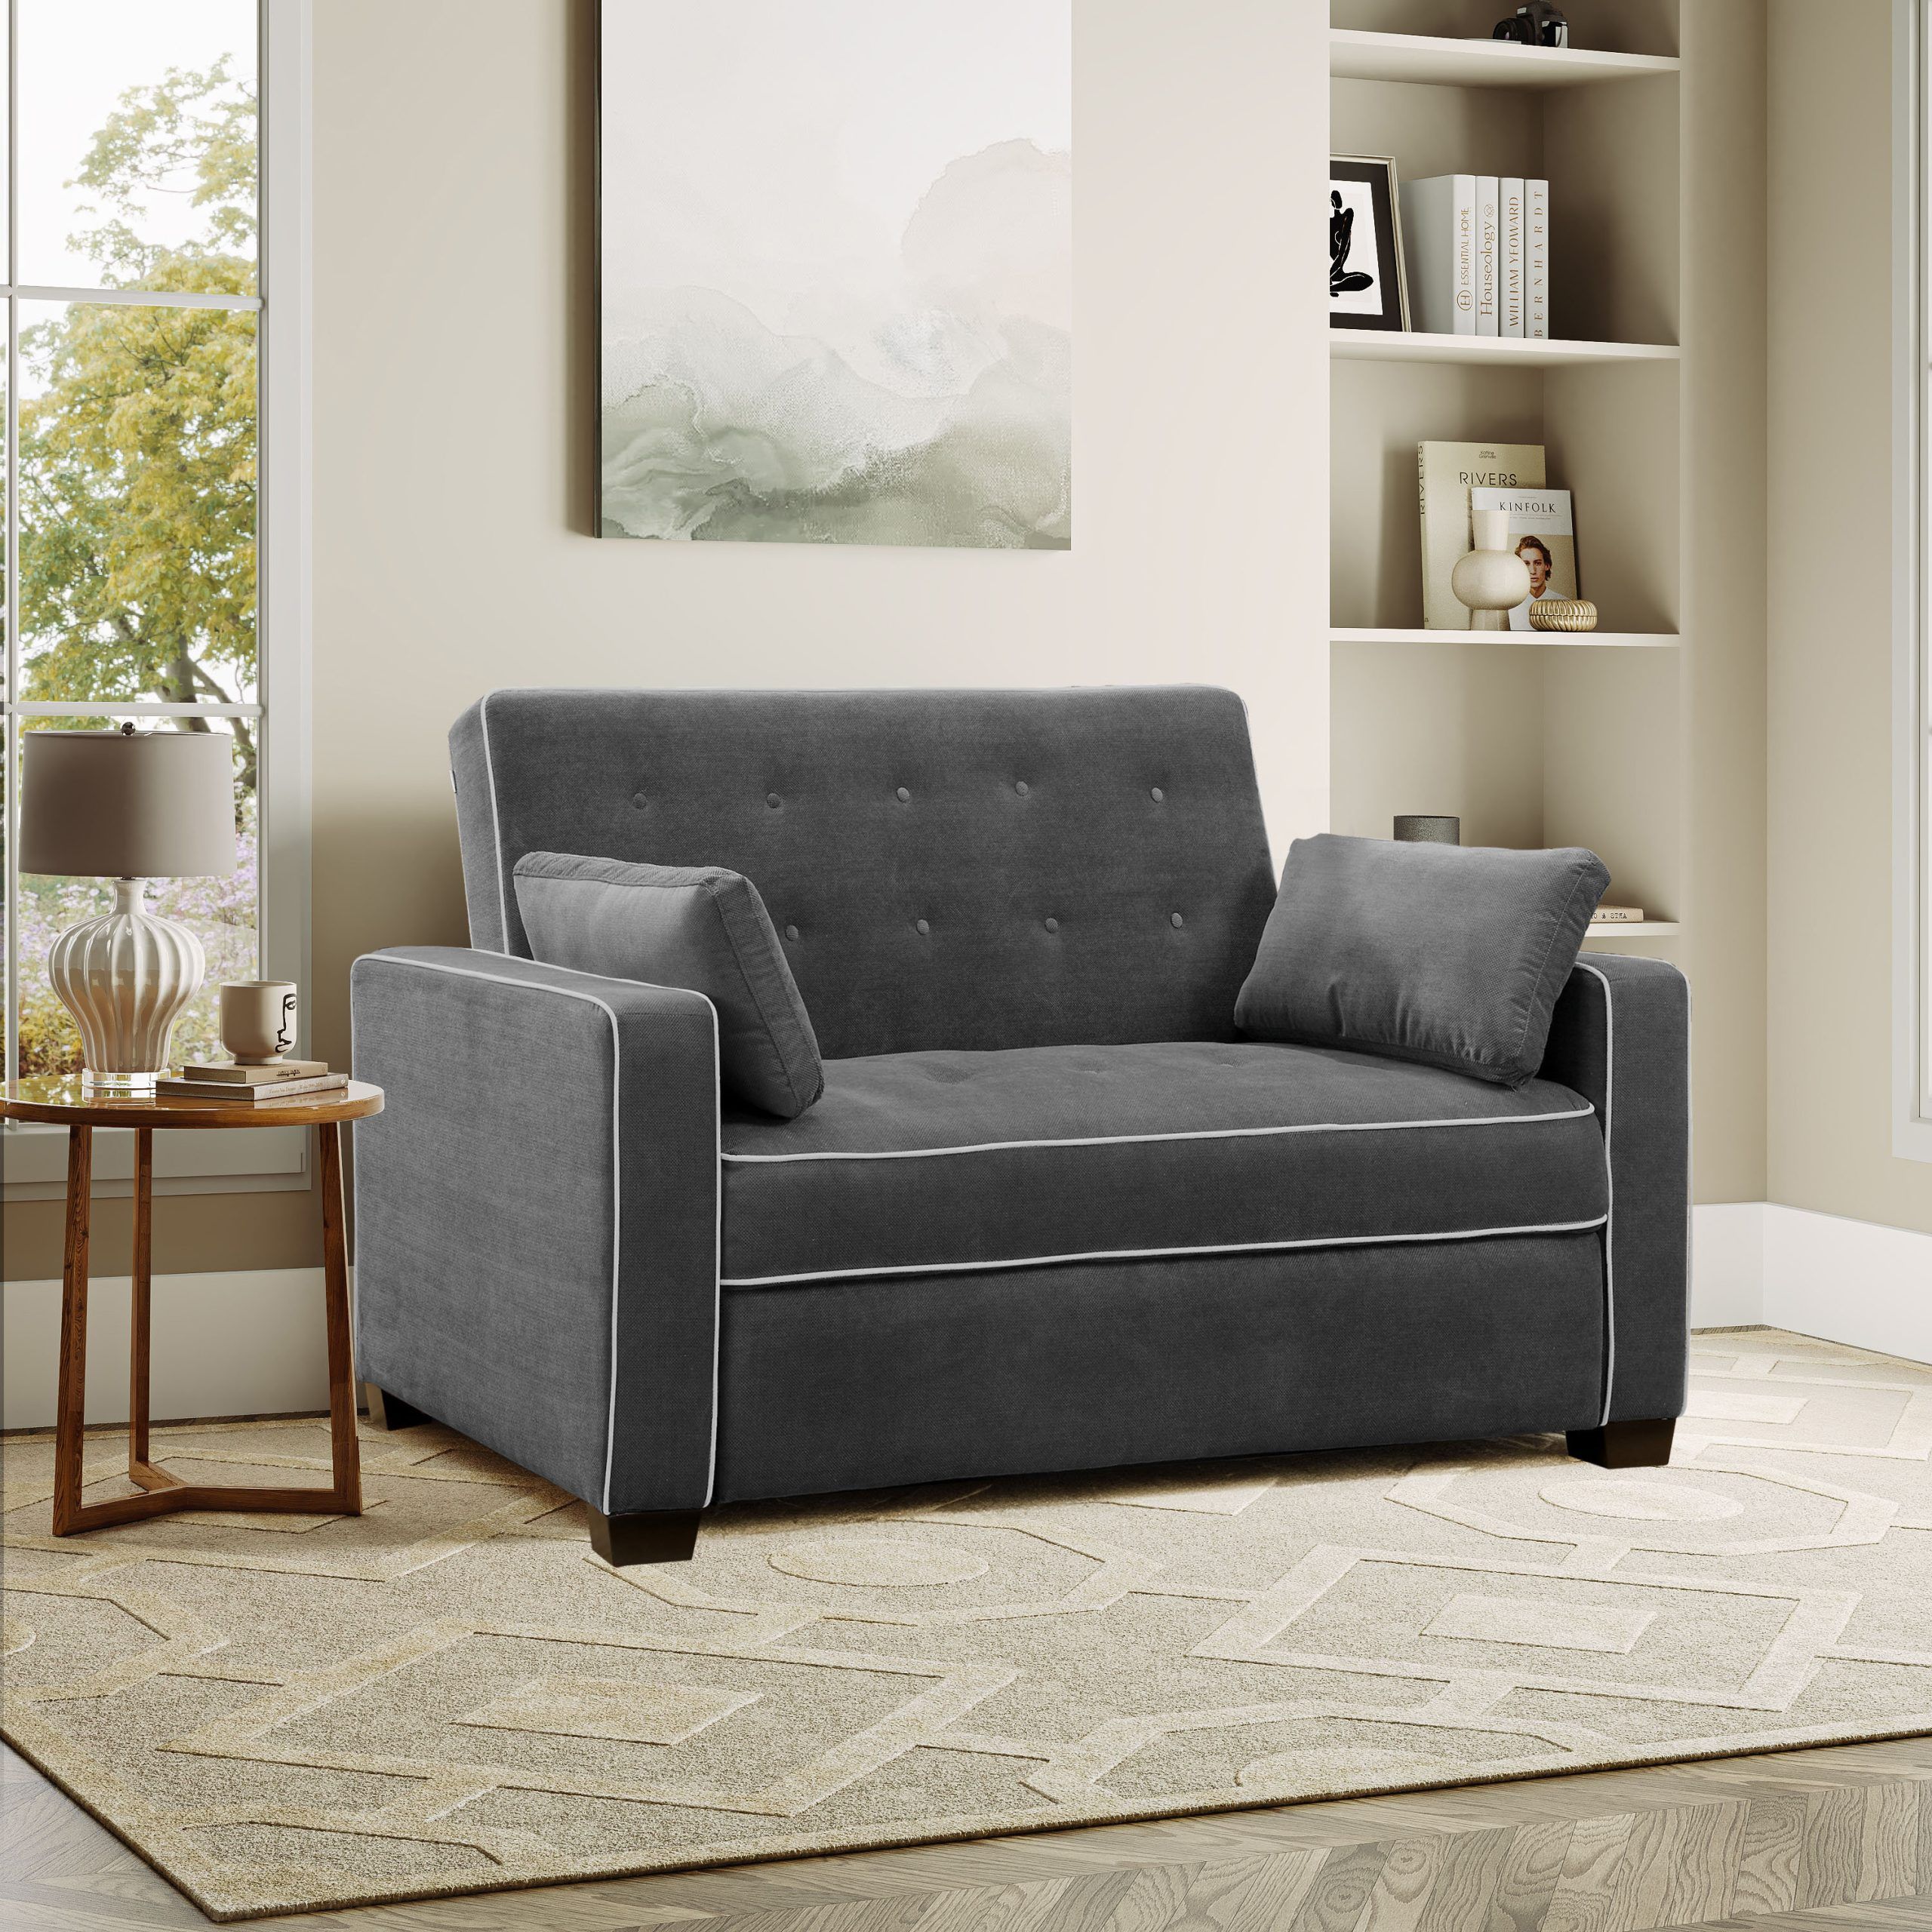 Serta Monroe Full Size Convertible Sleeper Sofa With Cushions & Reviews |  Wayfair With Regard To Convertible Gray Loveseat Sleepers (Photo 12 of 15)